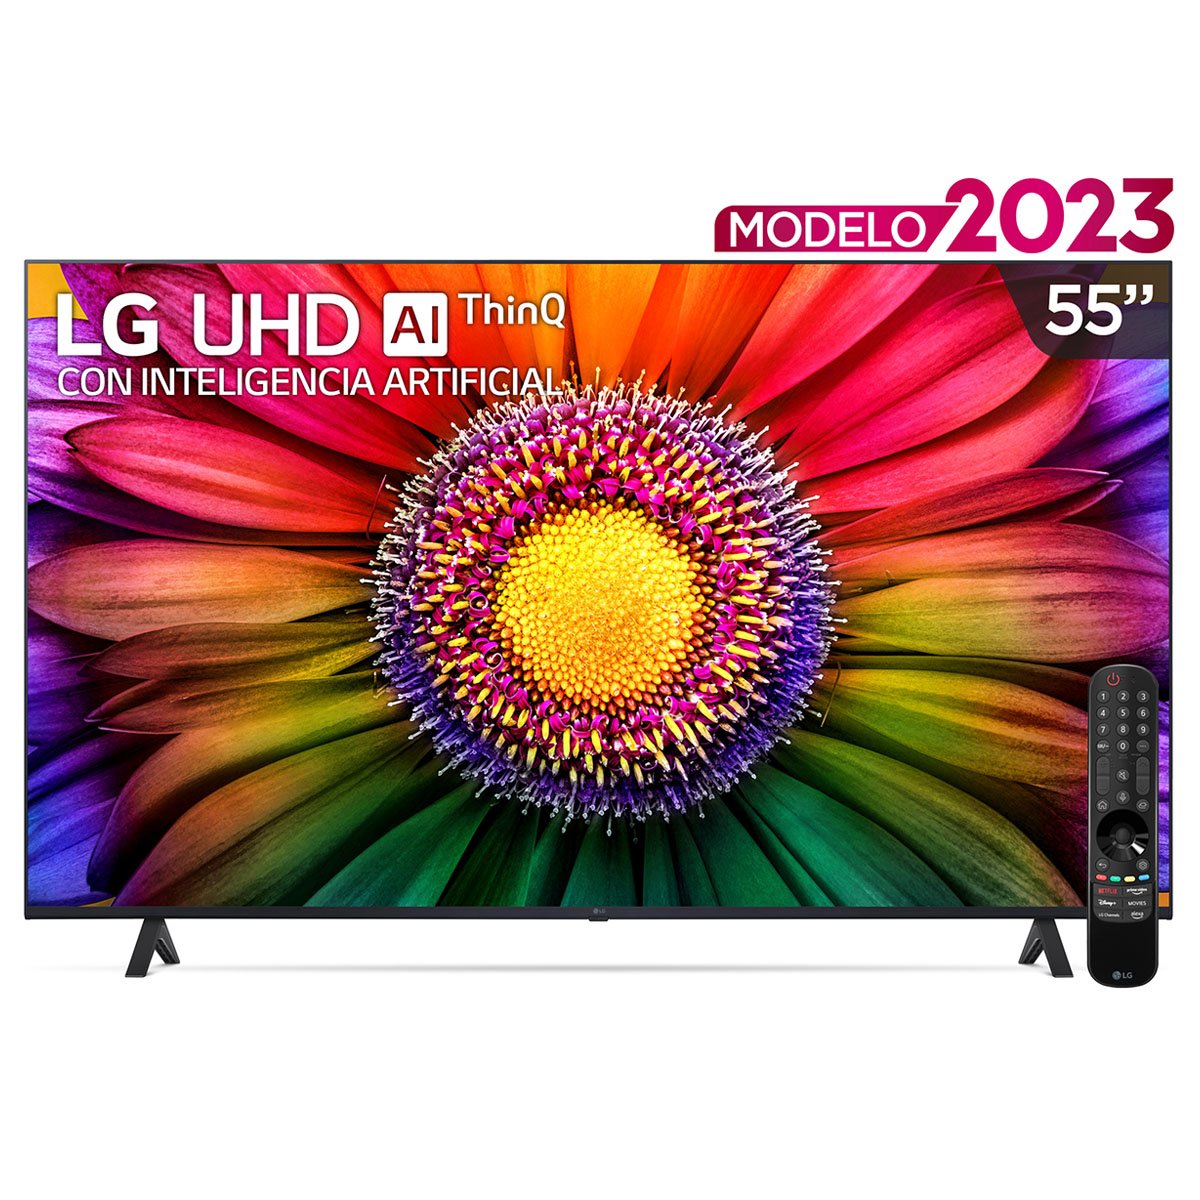 Pantalla LG 55" UHD AI ThinQ 4K SMART TV  55UR8750PSA